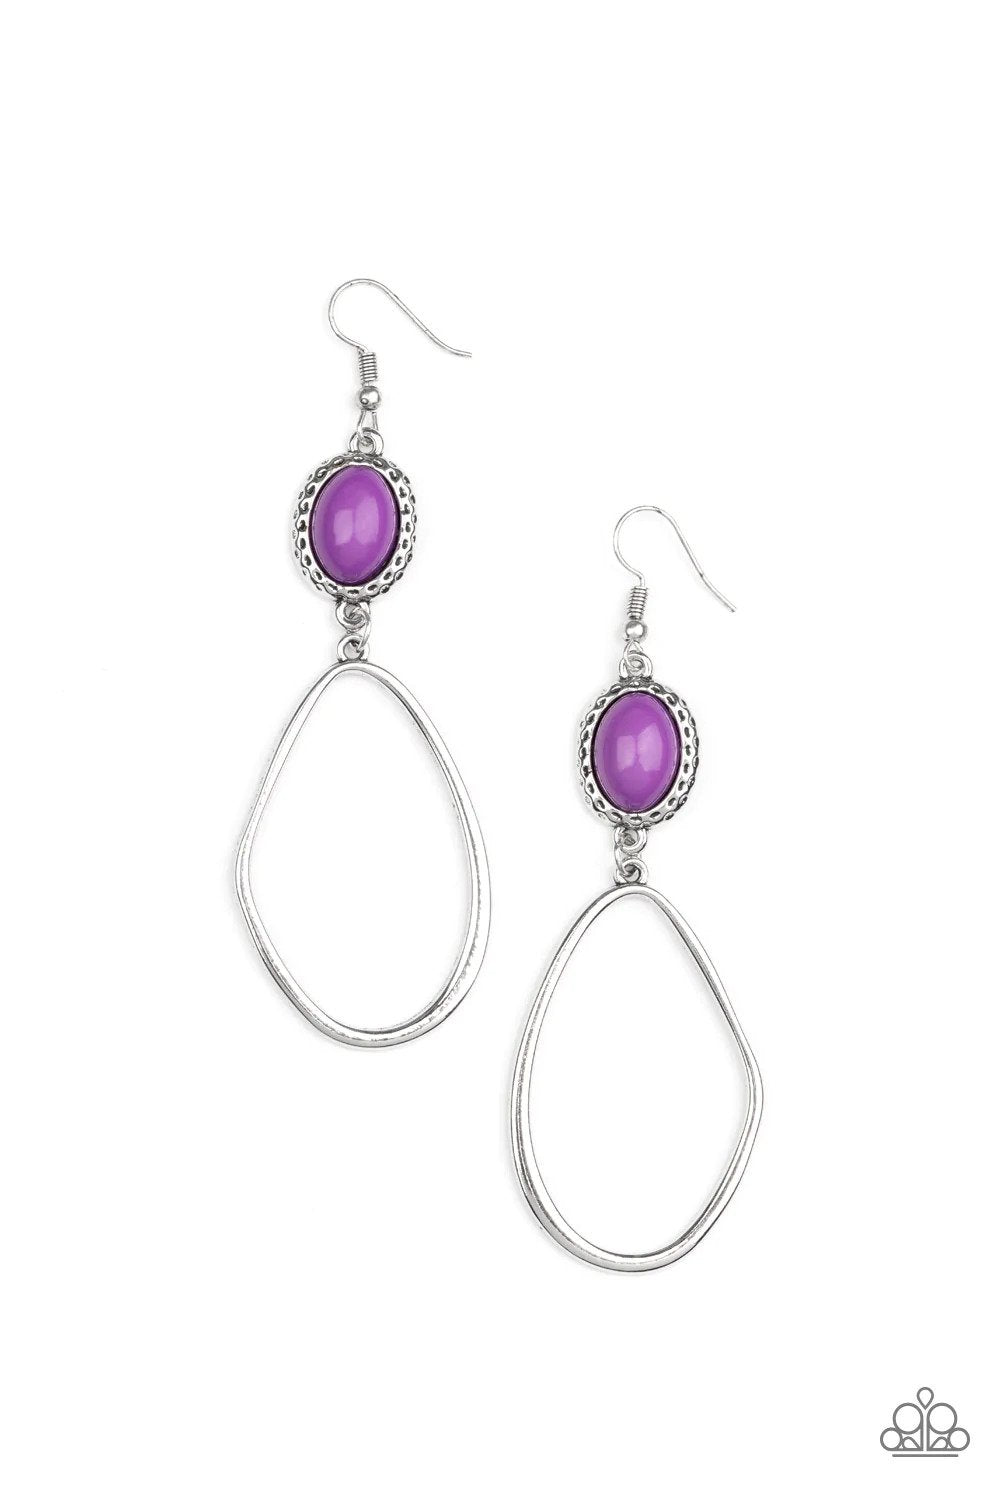 Adventurous Allure Purple Earrings - Paparazzi Accessories- lightbox - CarasShop.com - $5 Jewelry by Cara Jewels